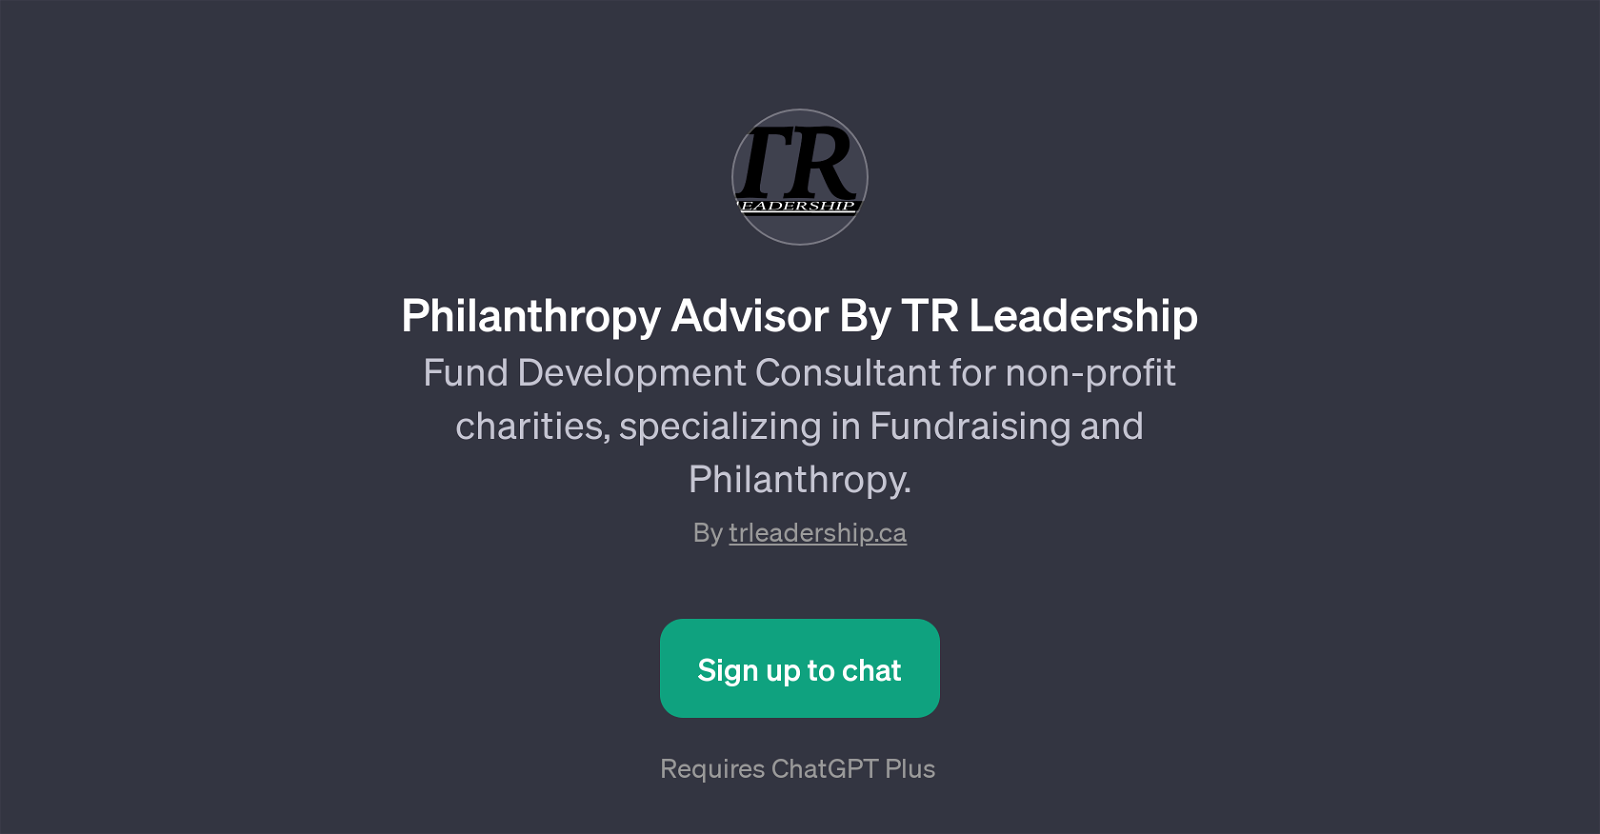 Philanthropy Advisor By TR Leadership website